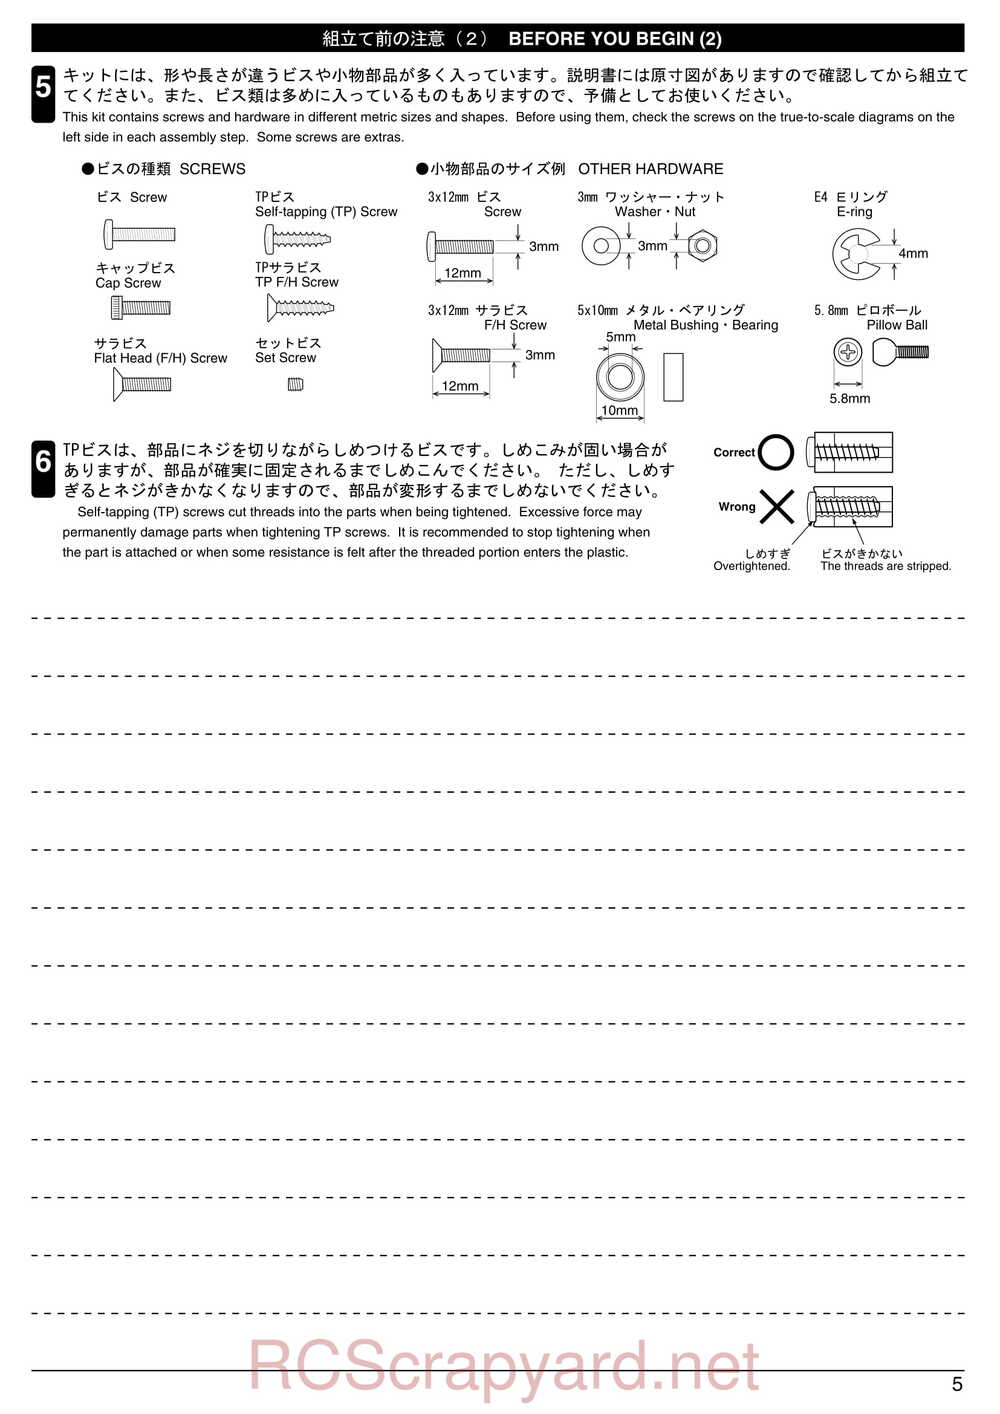 Kyosho - 31283 - Evolva-2003 - Manual - Page 05